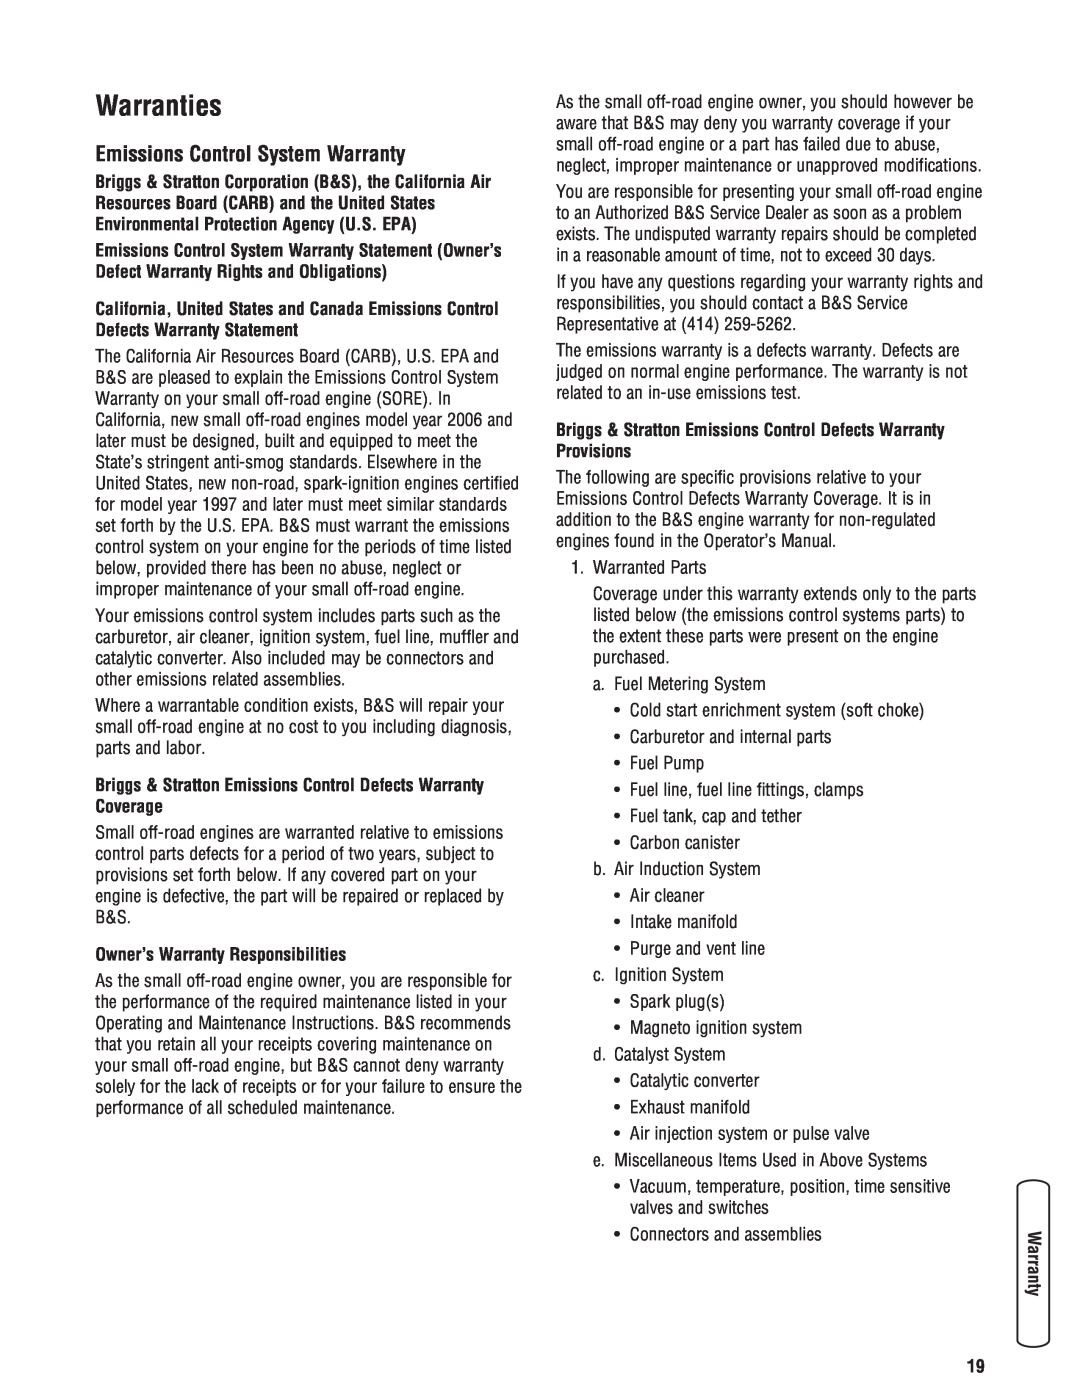 Briggs & Stratton 30348 manual Warranties, Emissions Control System Warranty, Owner’s Warranty Responsibilities 